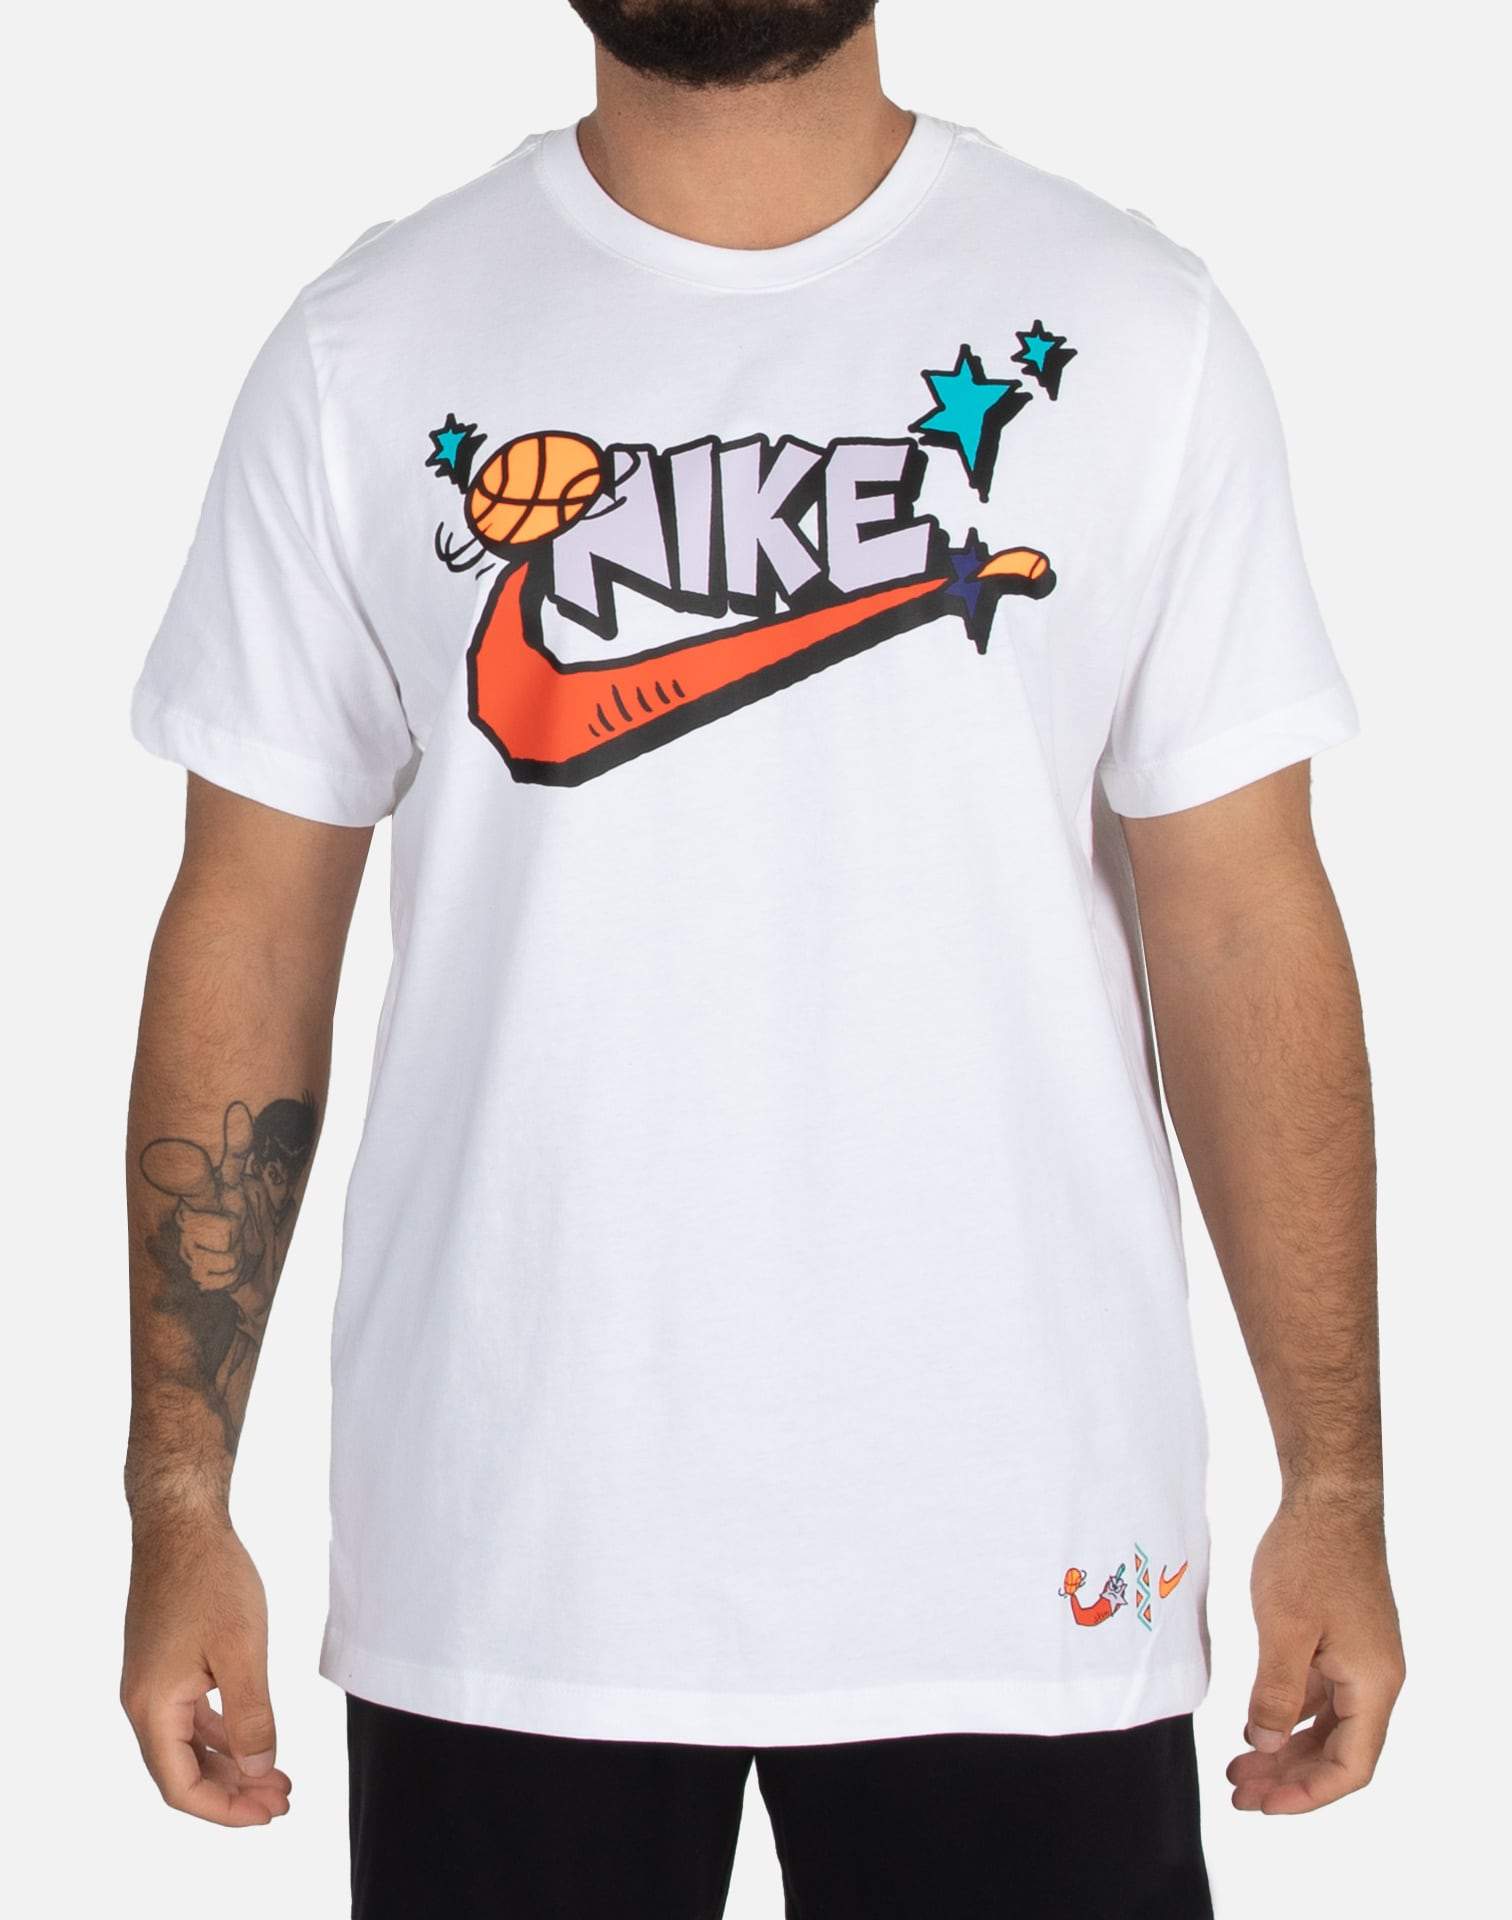 Nike Dri Fit Digital Circuit Basketball Net T-Shirt Mens Size